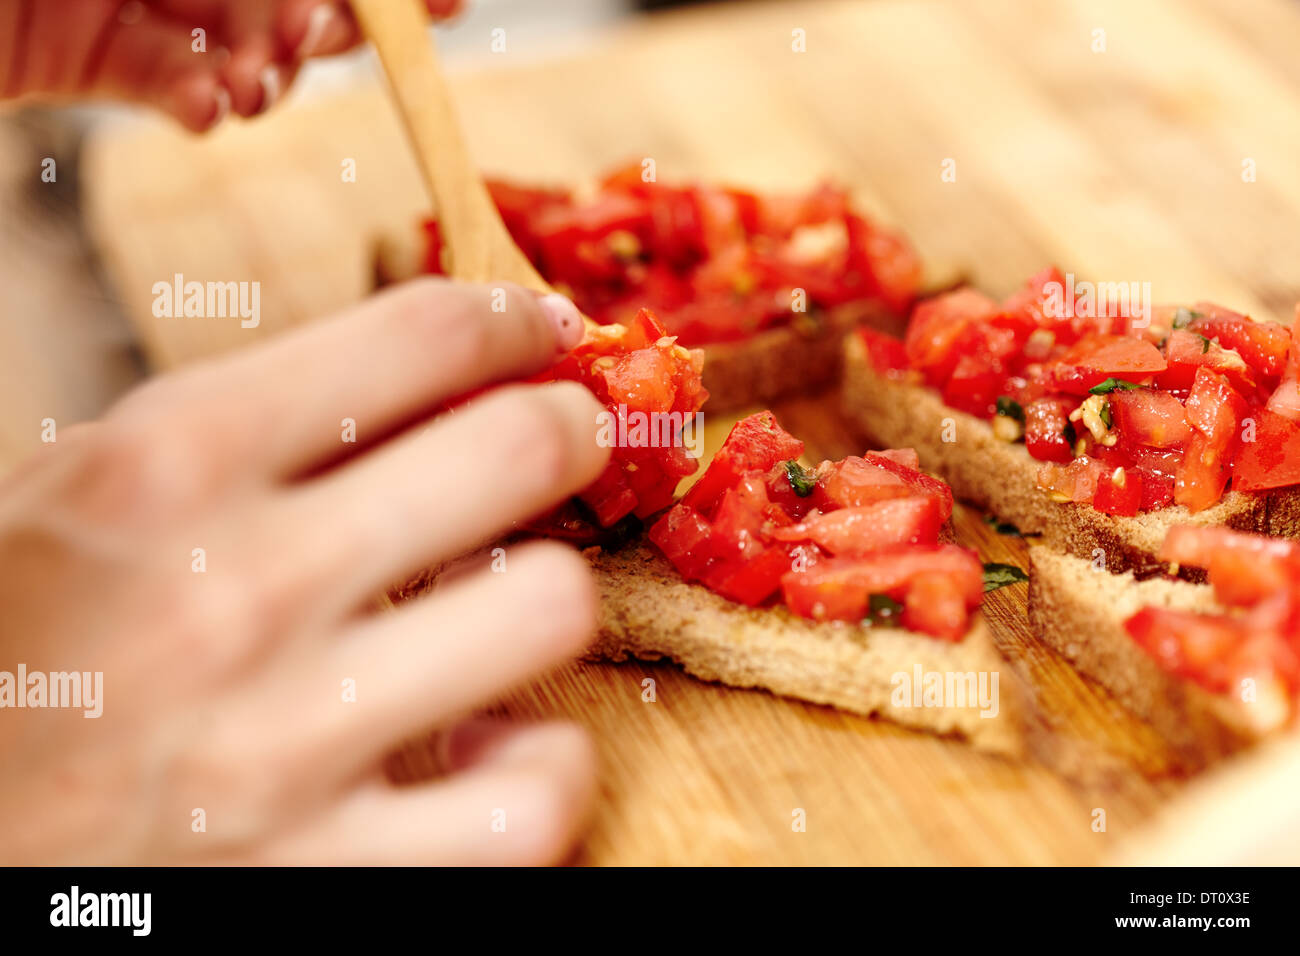 Closeup of cook's hands preparing tomato bruschettas on a wooden board Stock Photo